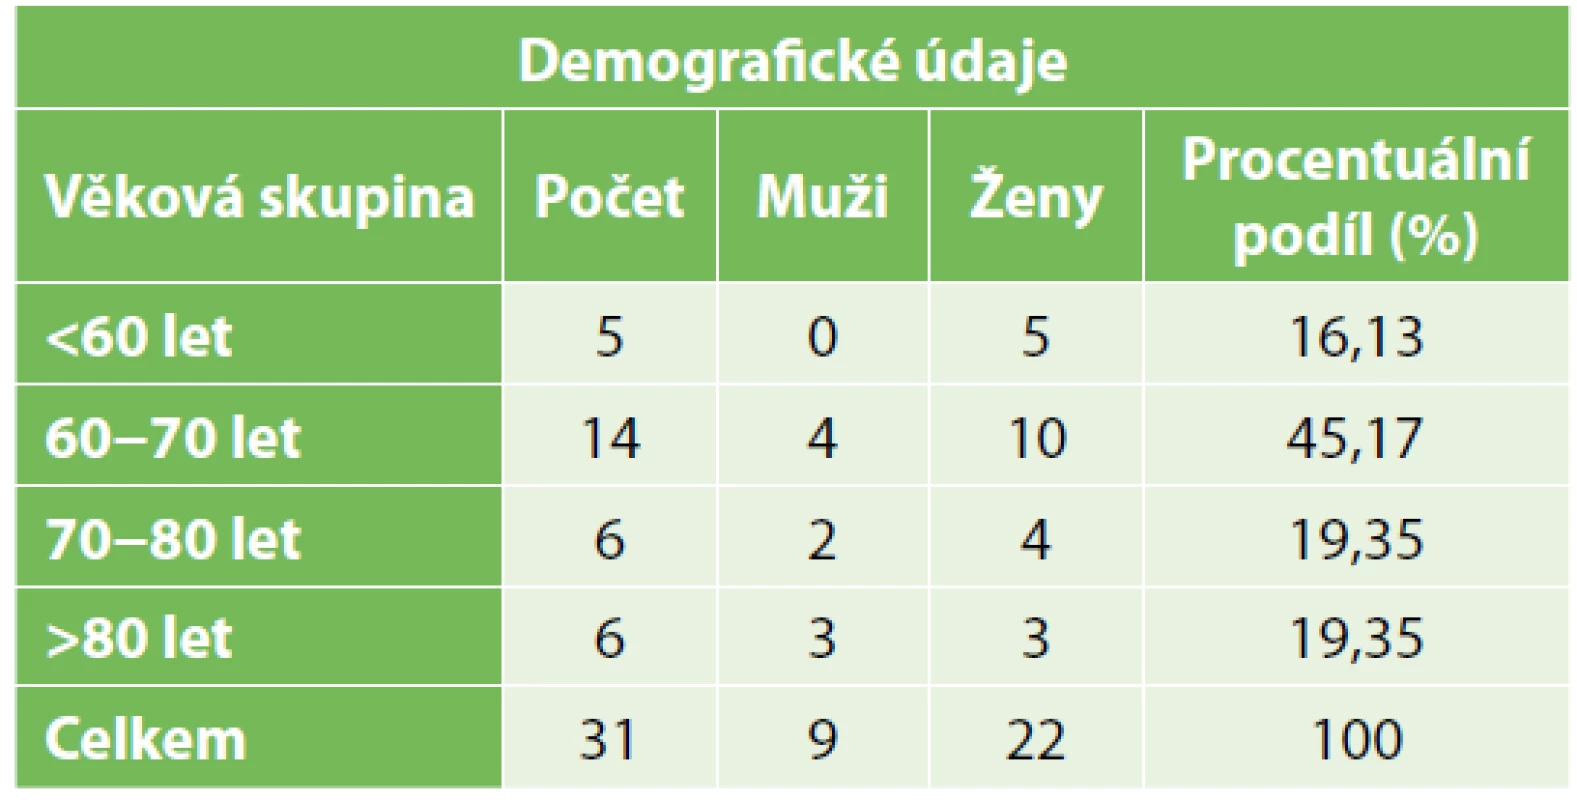 Demografické údaje<br>
Tab. 1. Demographic data